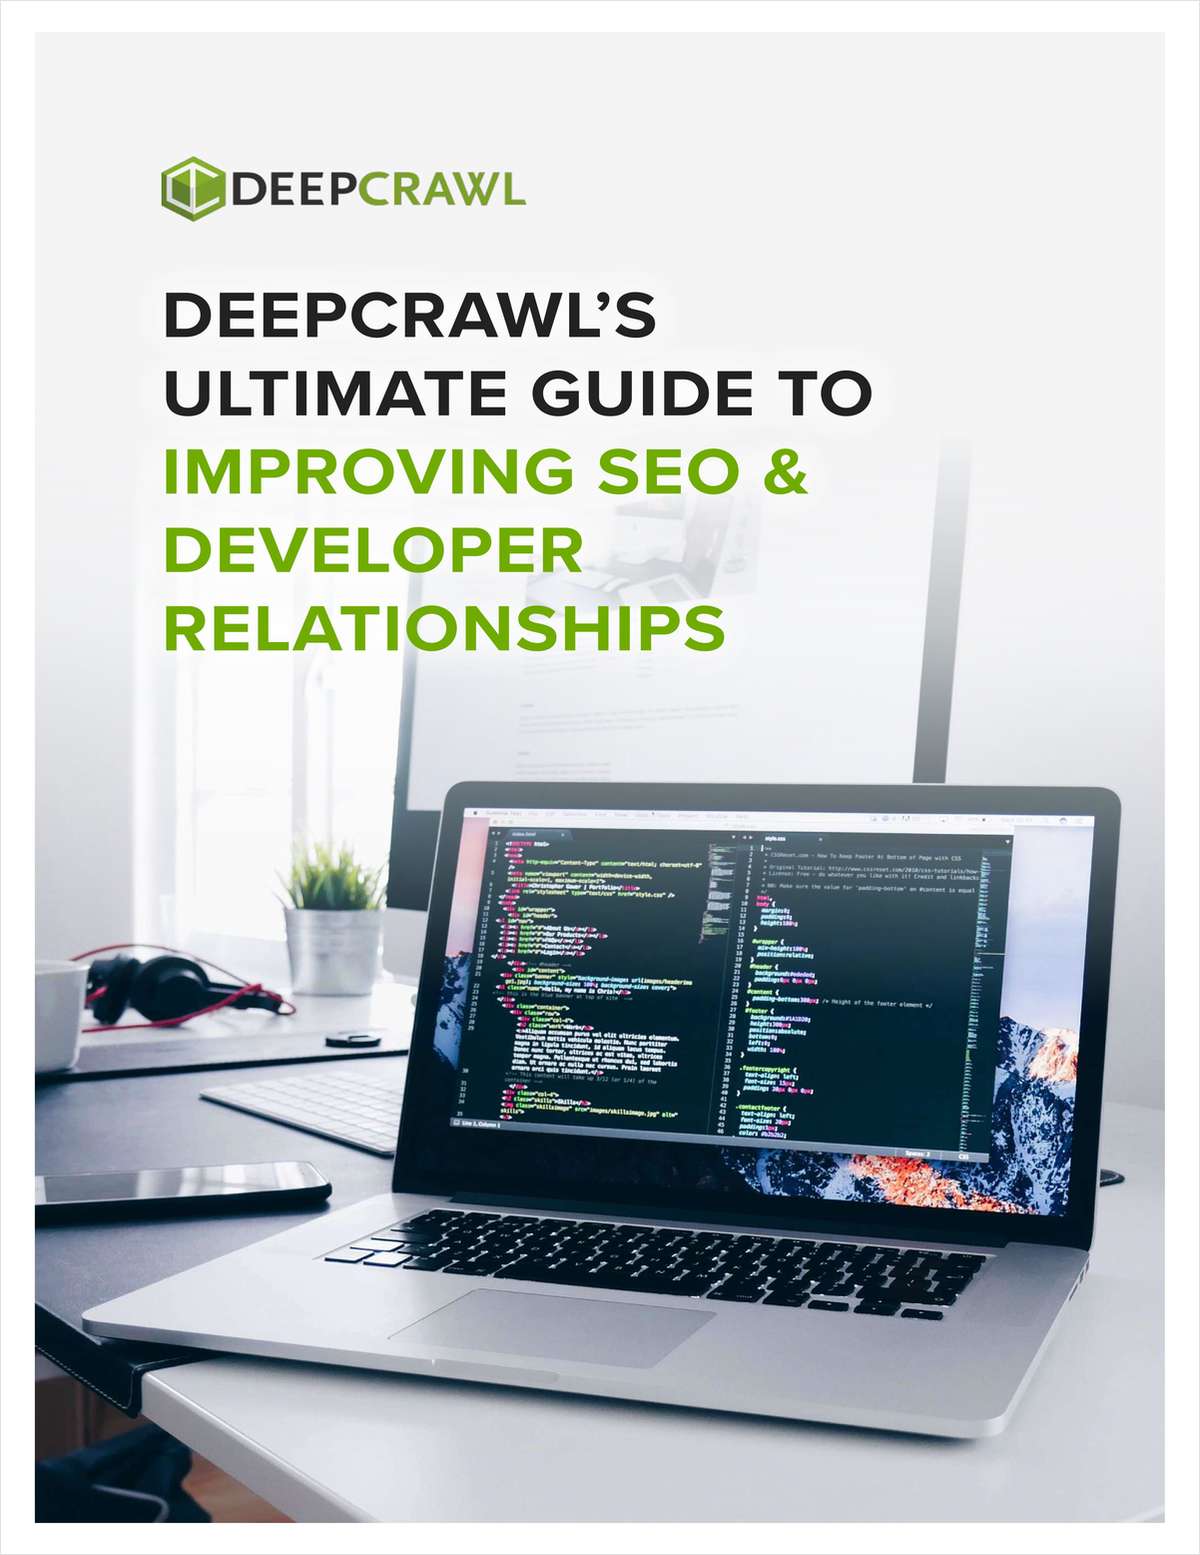 DeepCrawl's Ultimate Guide to Improving SEO & Developer Relationships